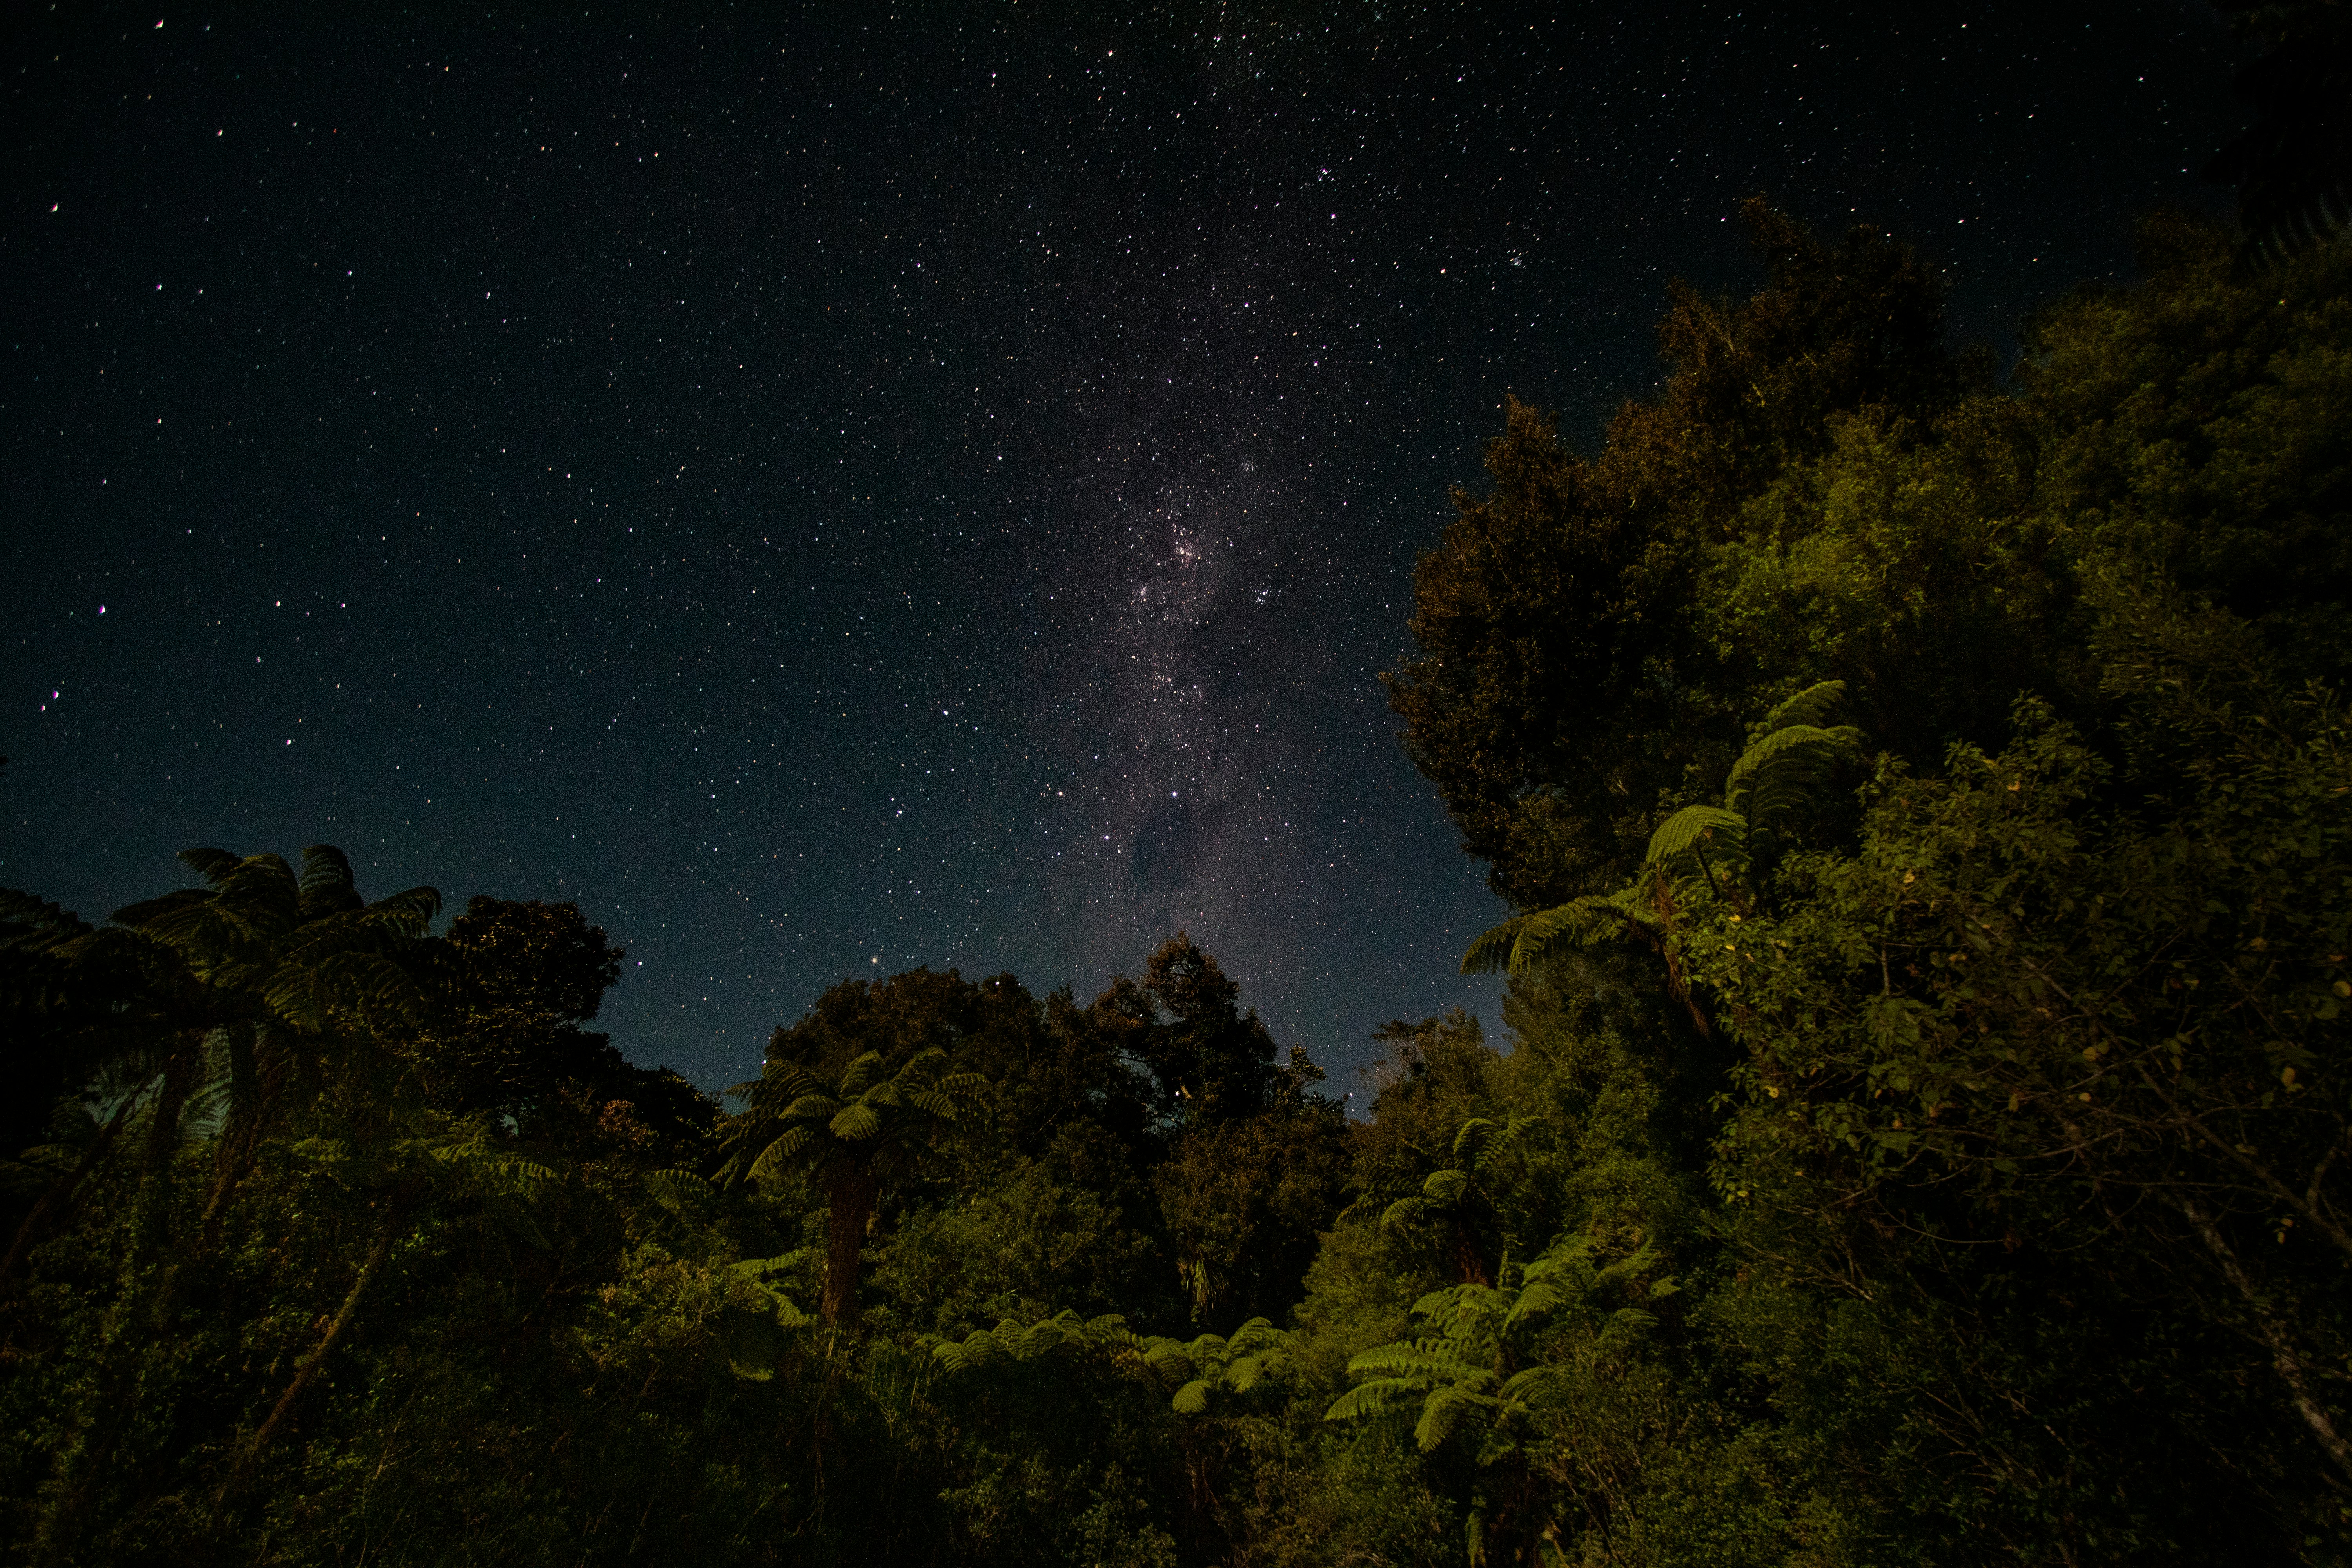 green trees under starry night